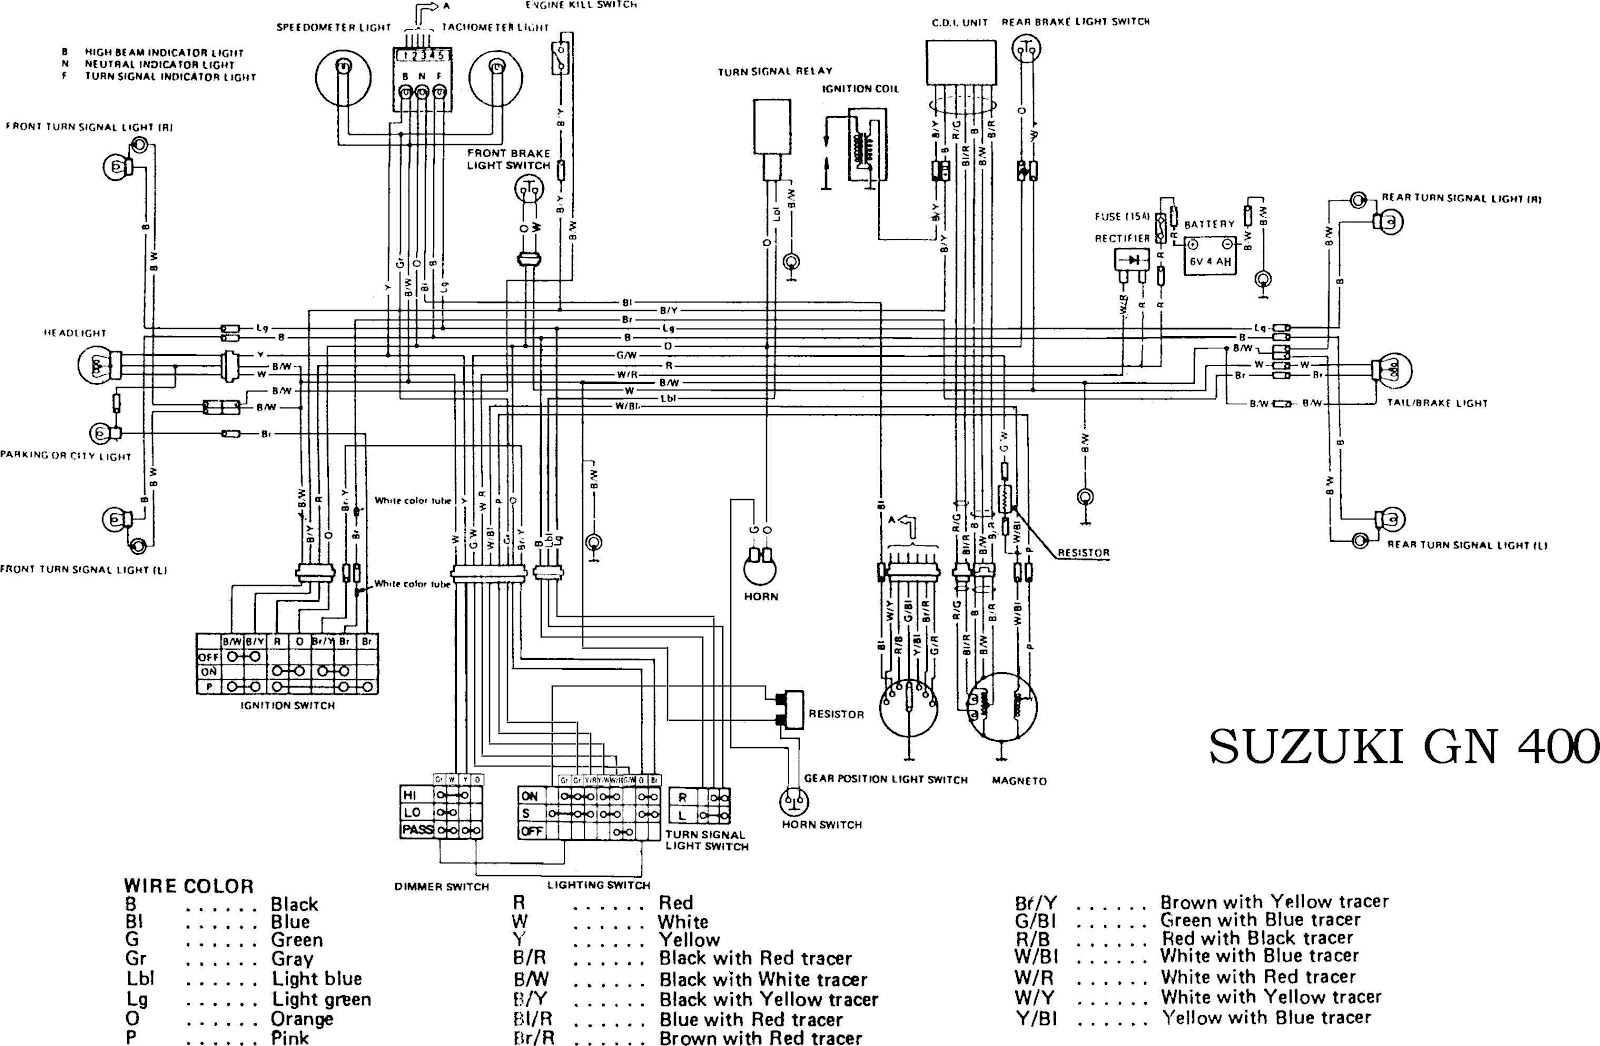 Suzuki+GN400+motorcycle+Complete+Electrical+Wiring+Diagram.jpg